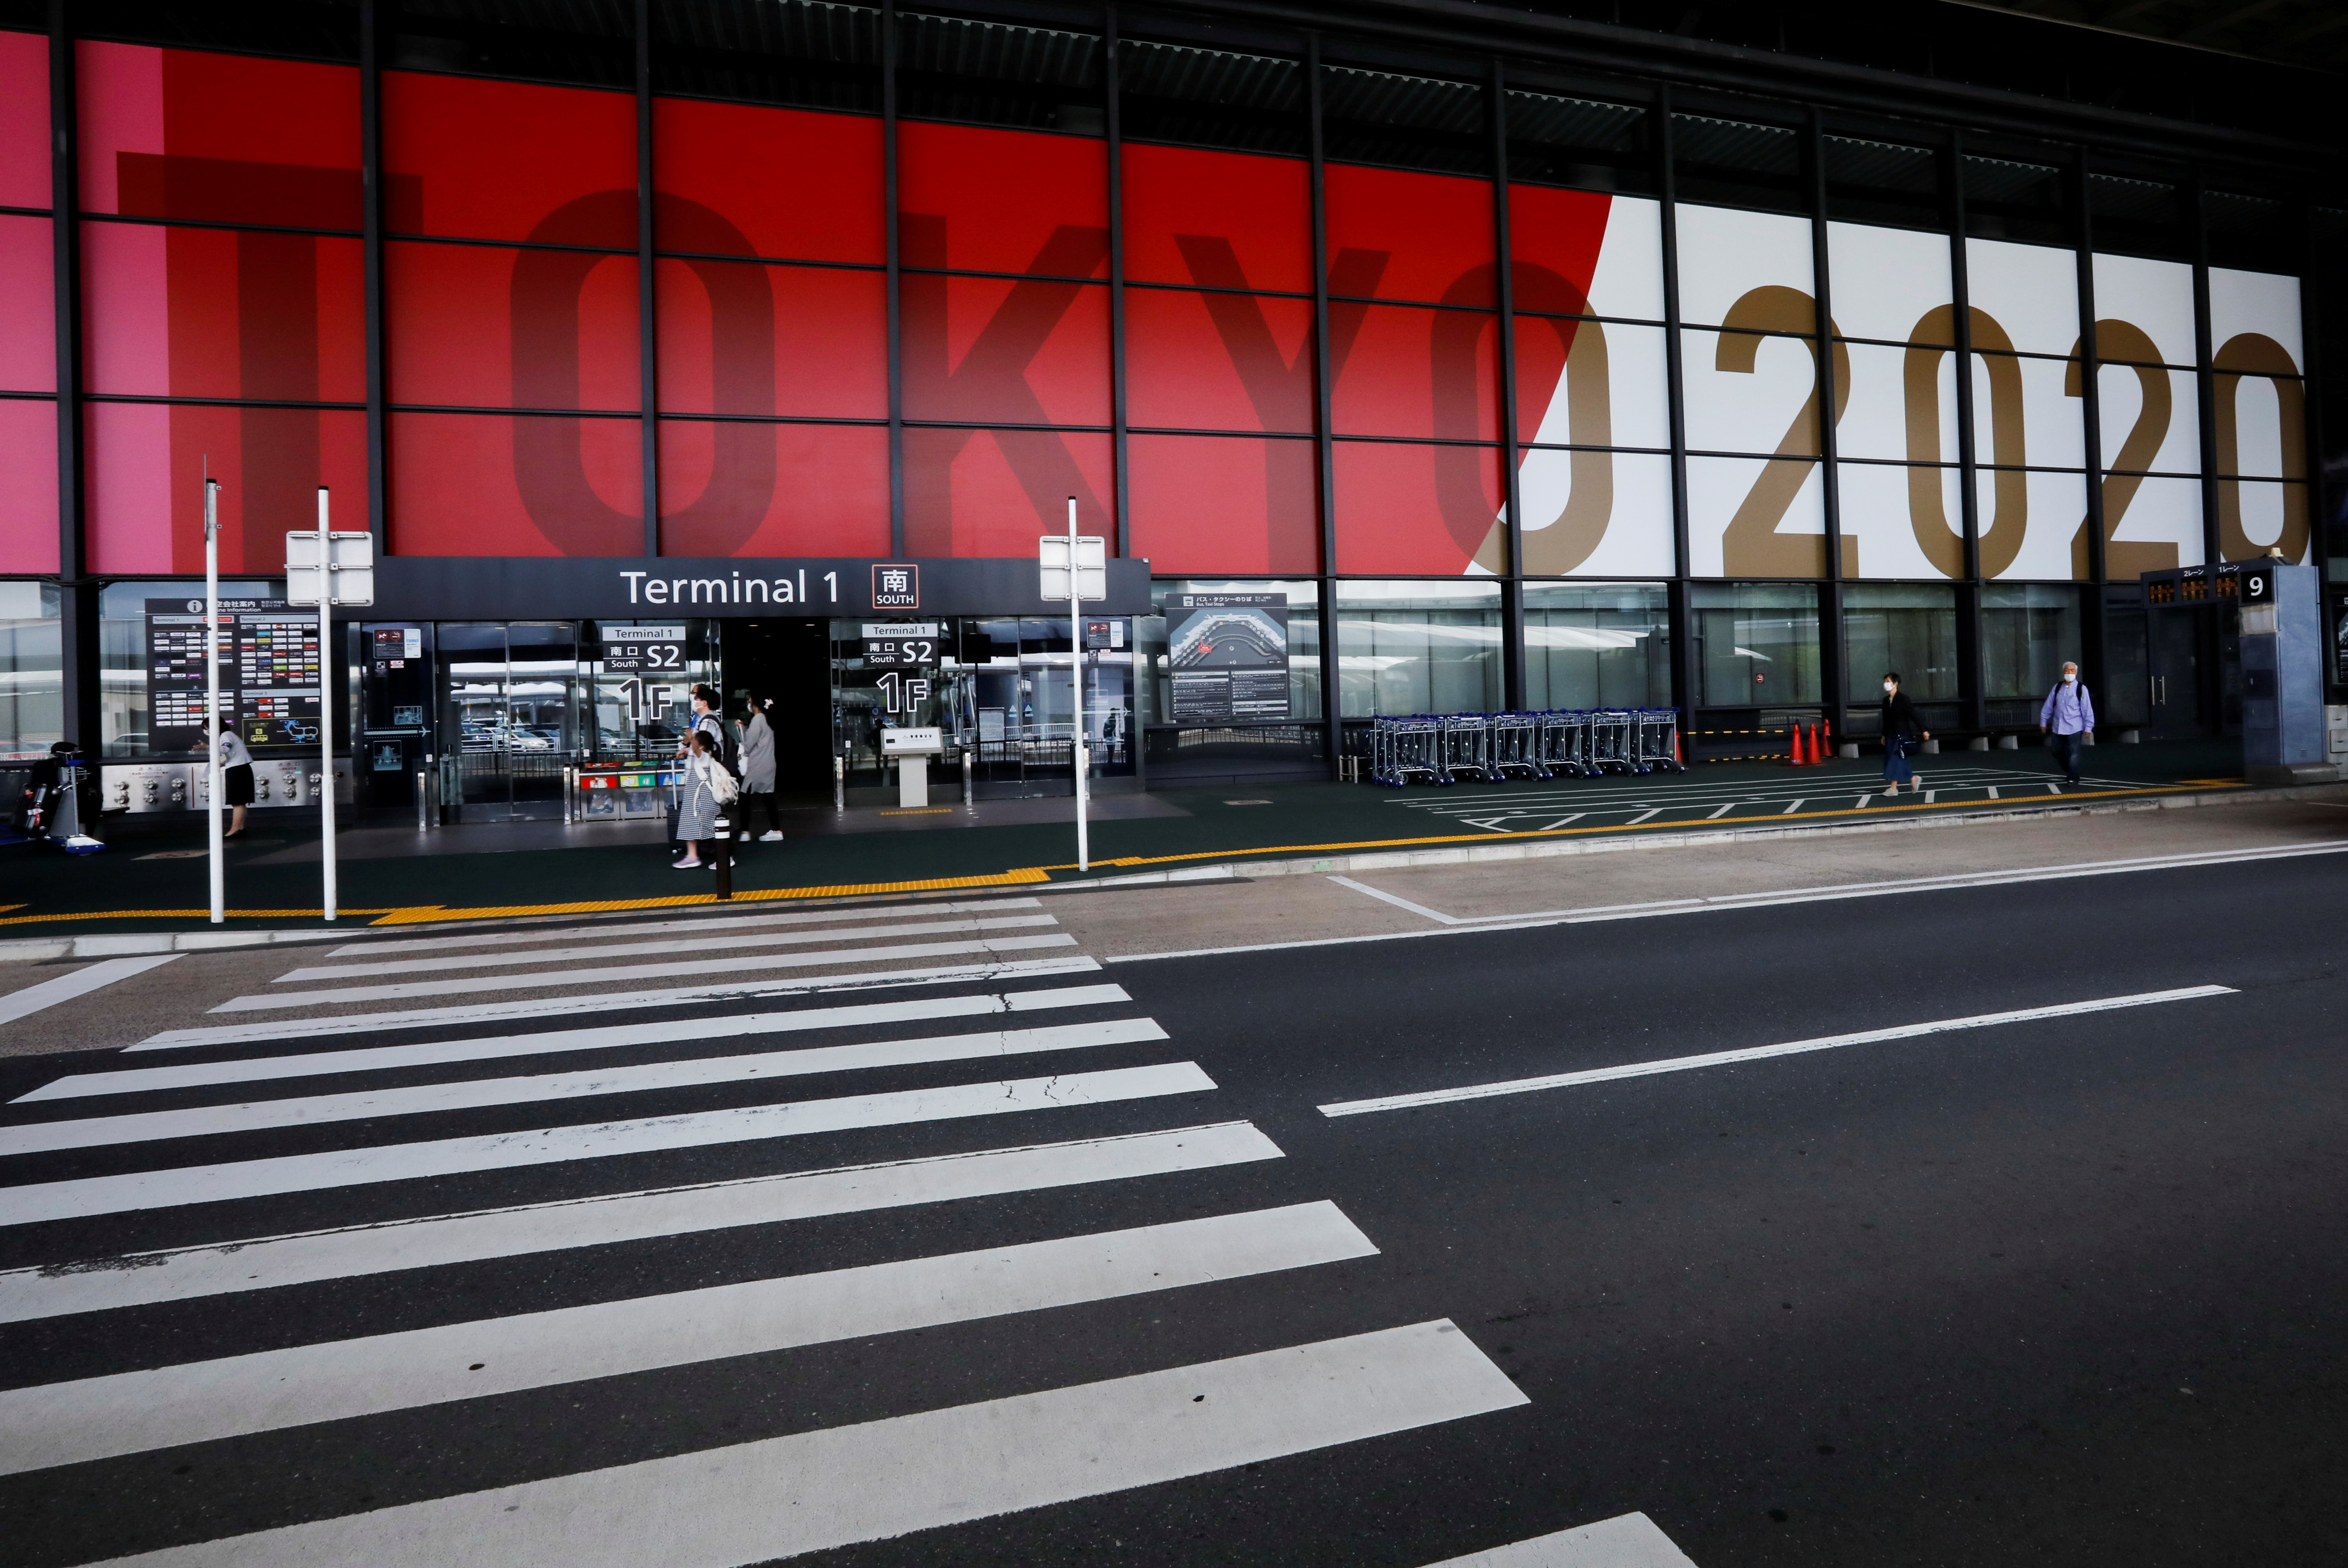 Tokyo 2020 Olympic and Paralympic Games advertisements are displayed at Narita international airport